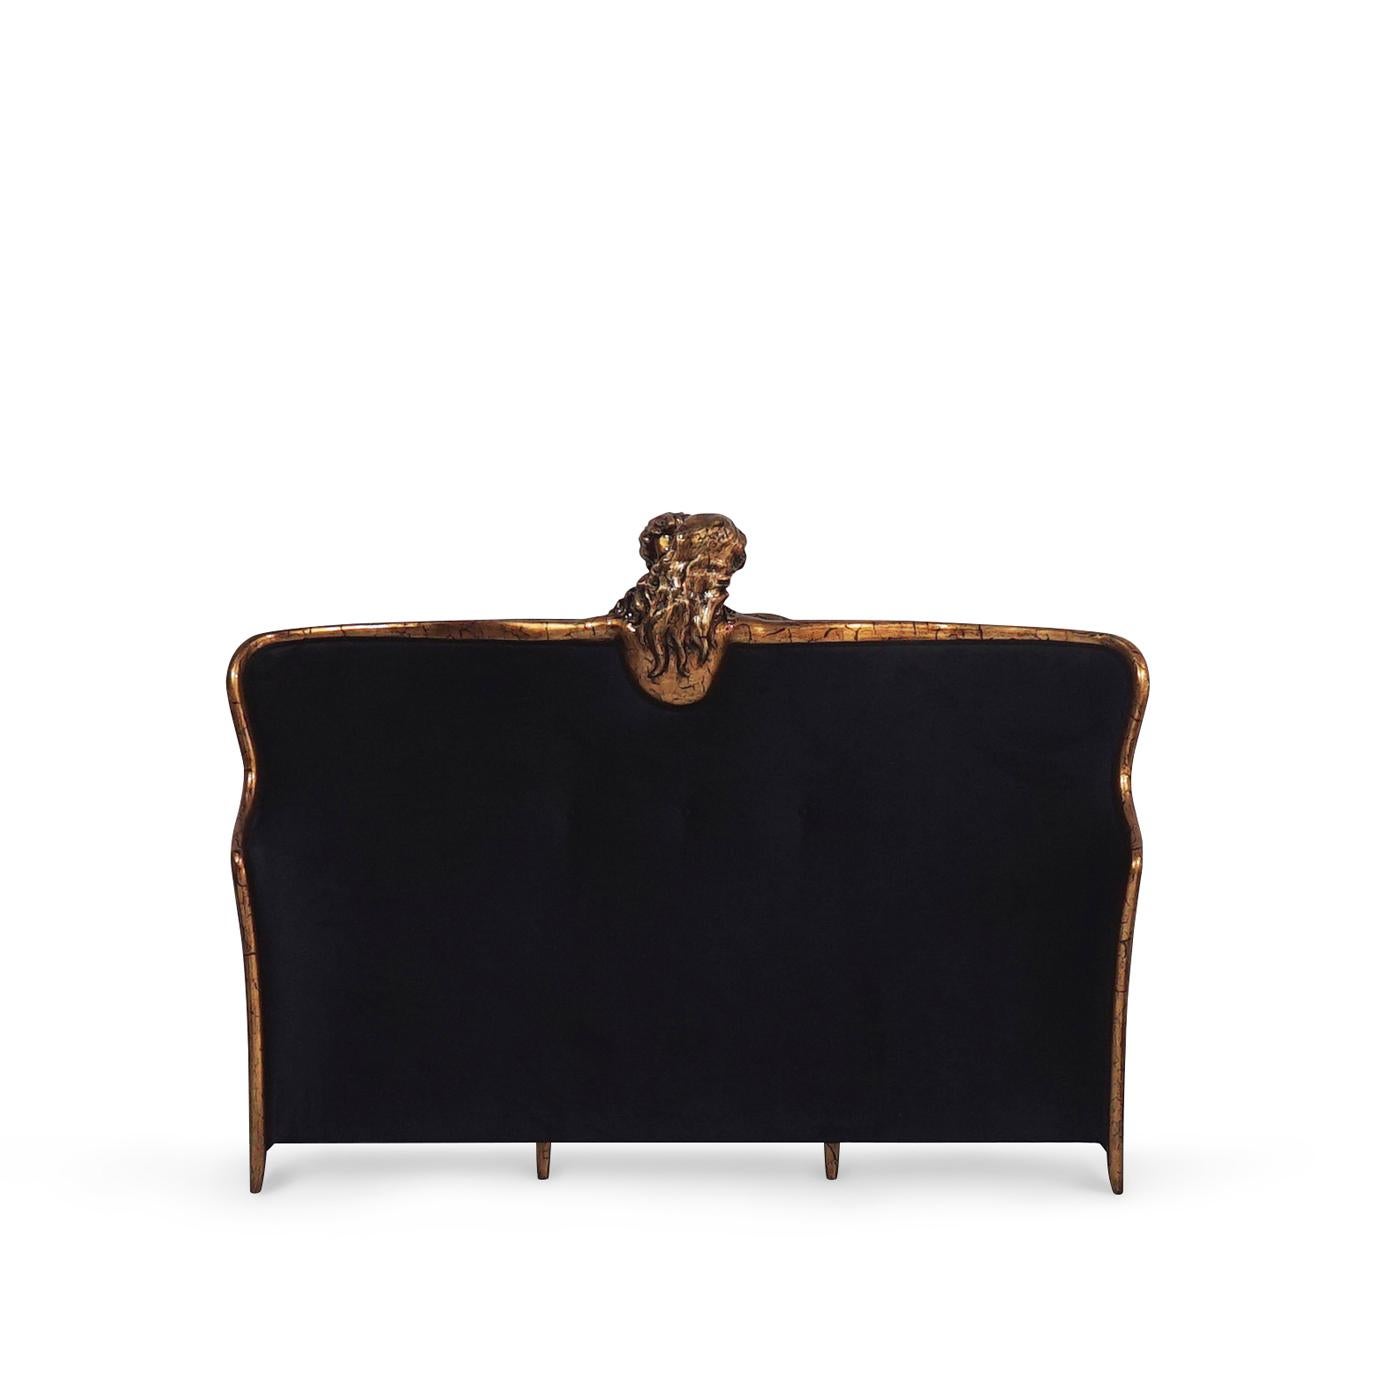 Forbidden Black Bed Queen Size In New Condition For Sale In Manassas, VA